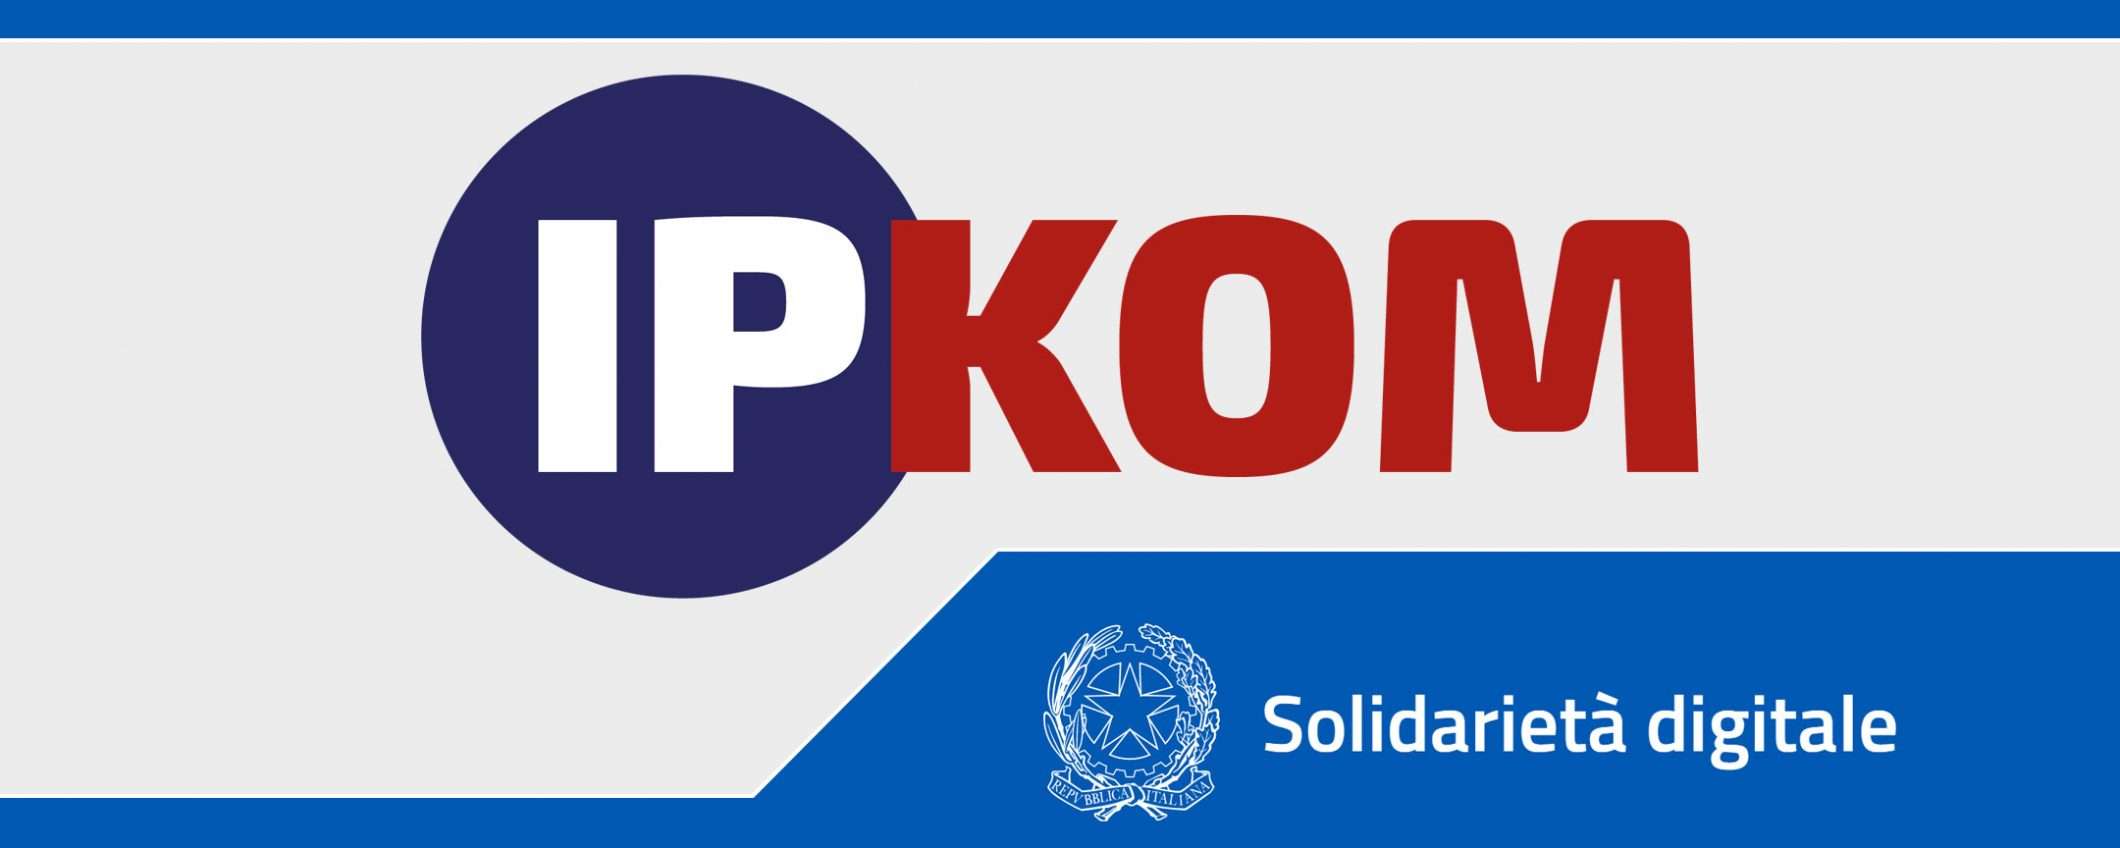 Solidarietà Digitale: IPKom offre Vediamoci